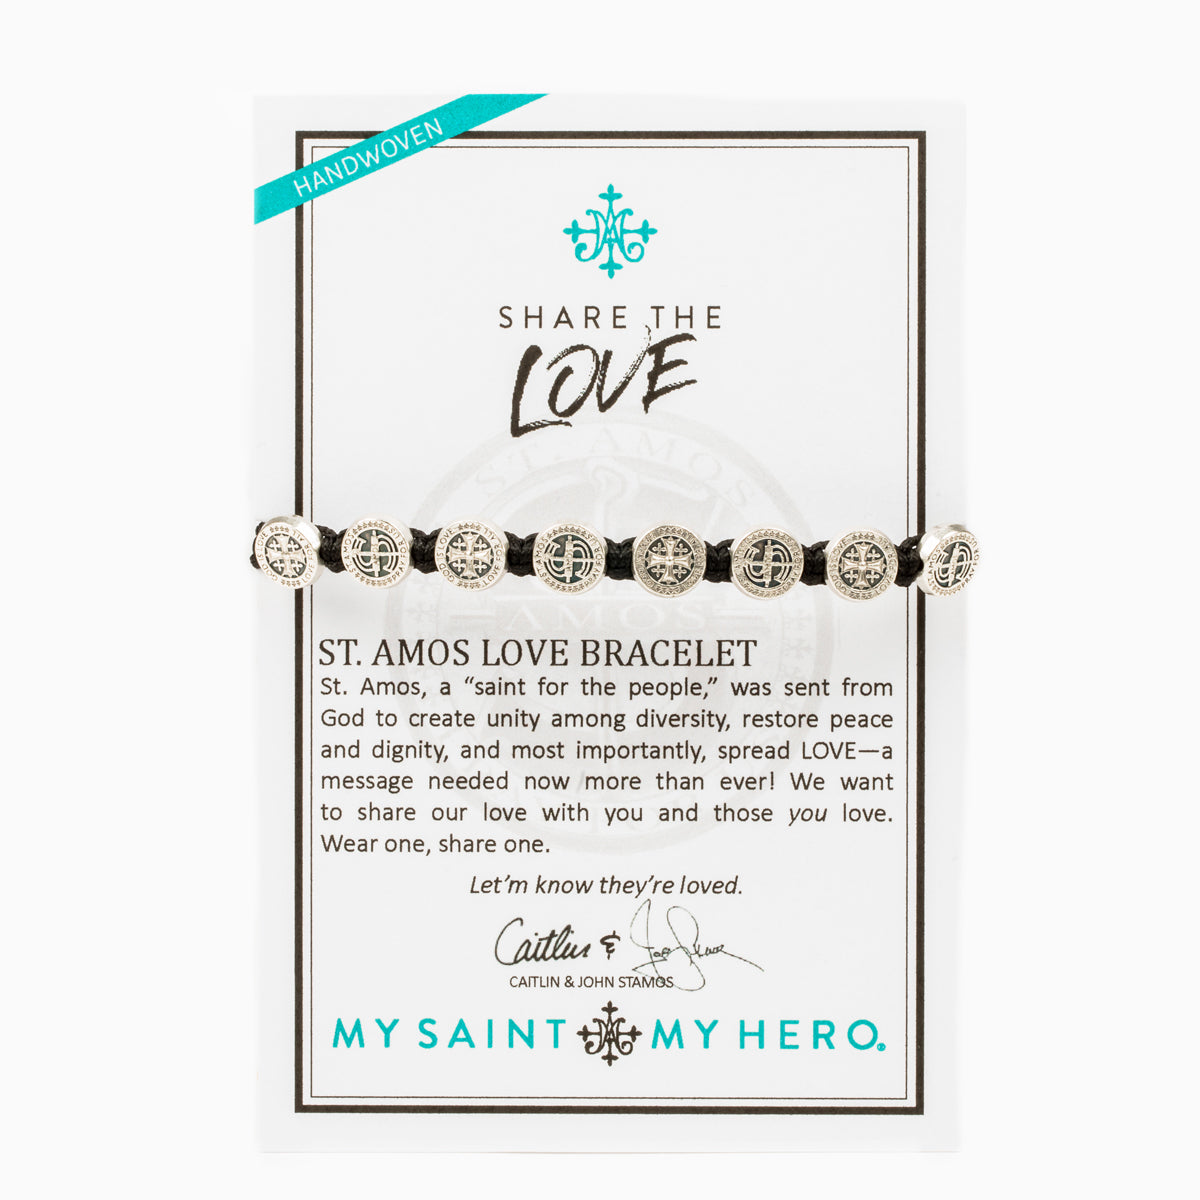 Share the Love - St. Amos Love Bracelet